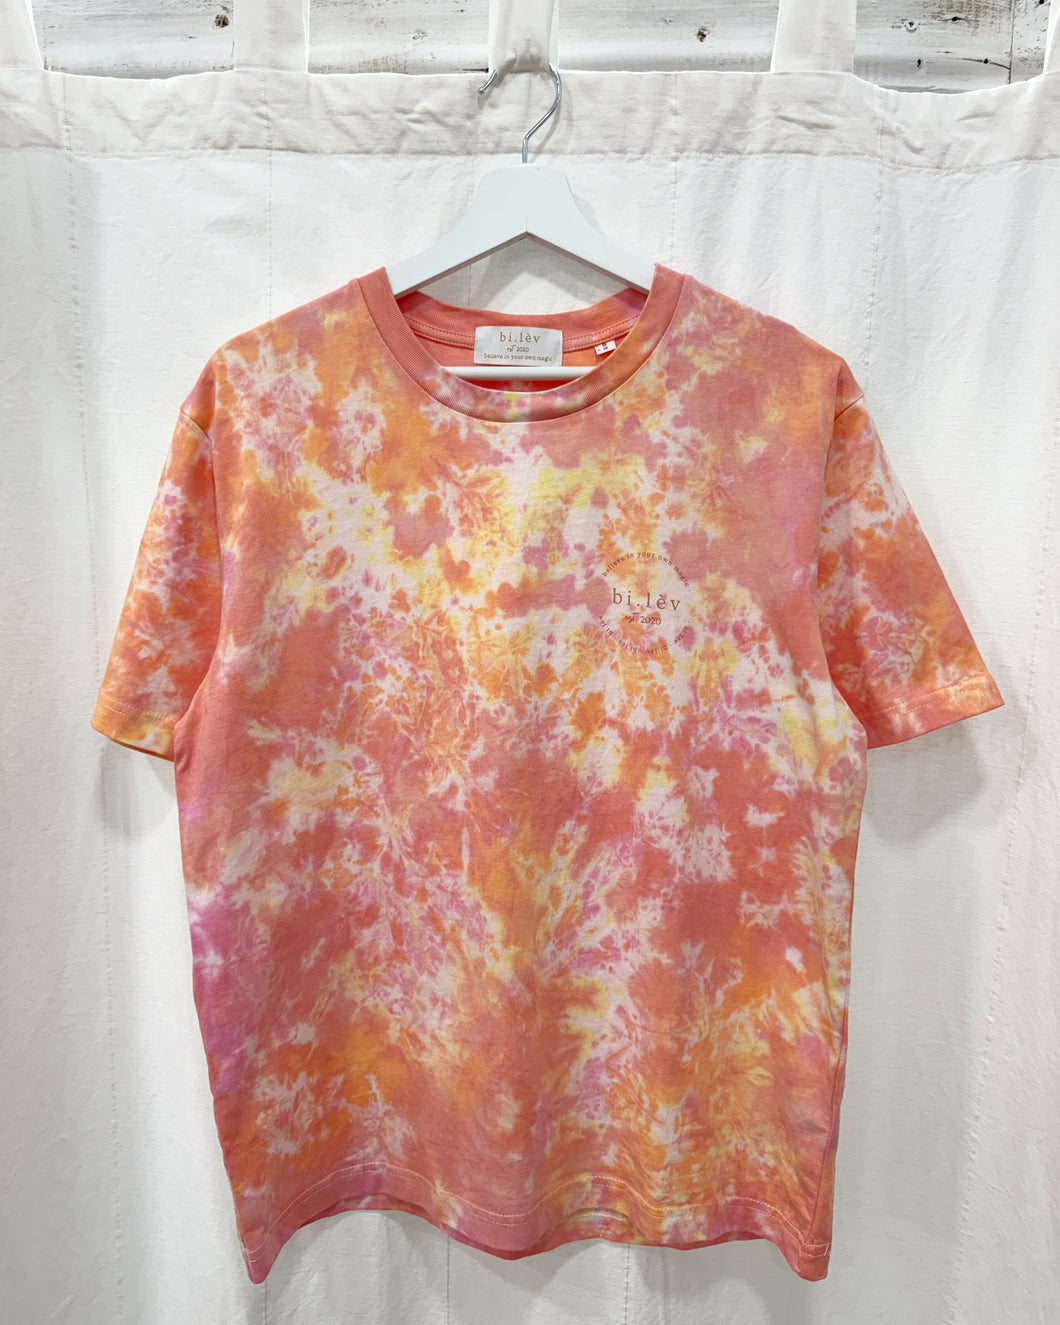 STRAWBERRY CITRUS - Tie Dye Organic Cotton T-shirt